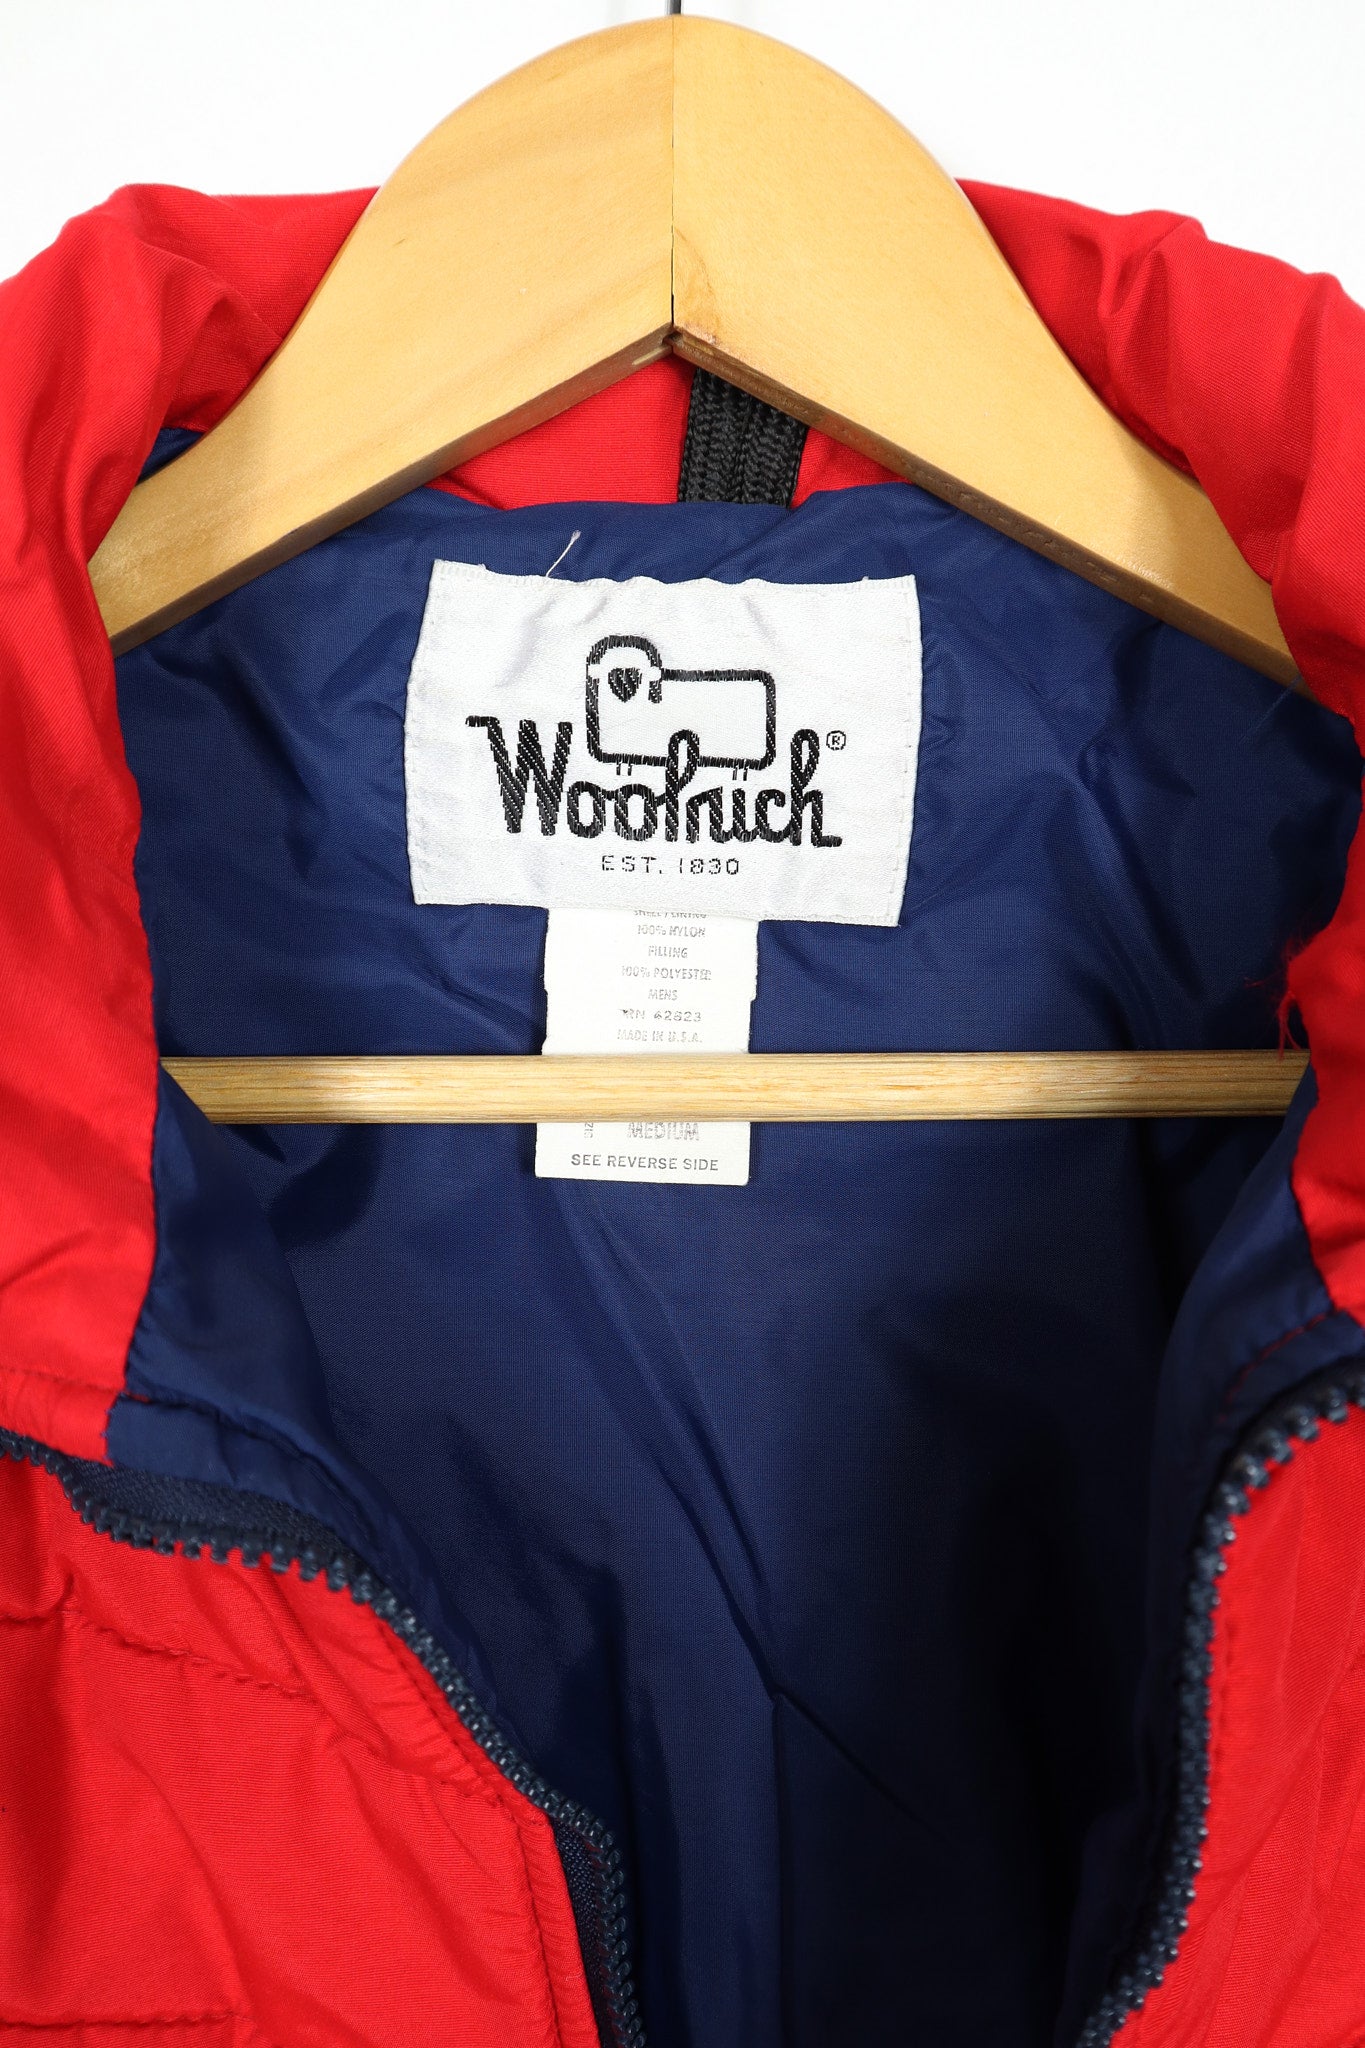 Vintage Woolrich Red Puffer Jacket